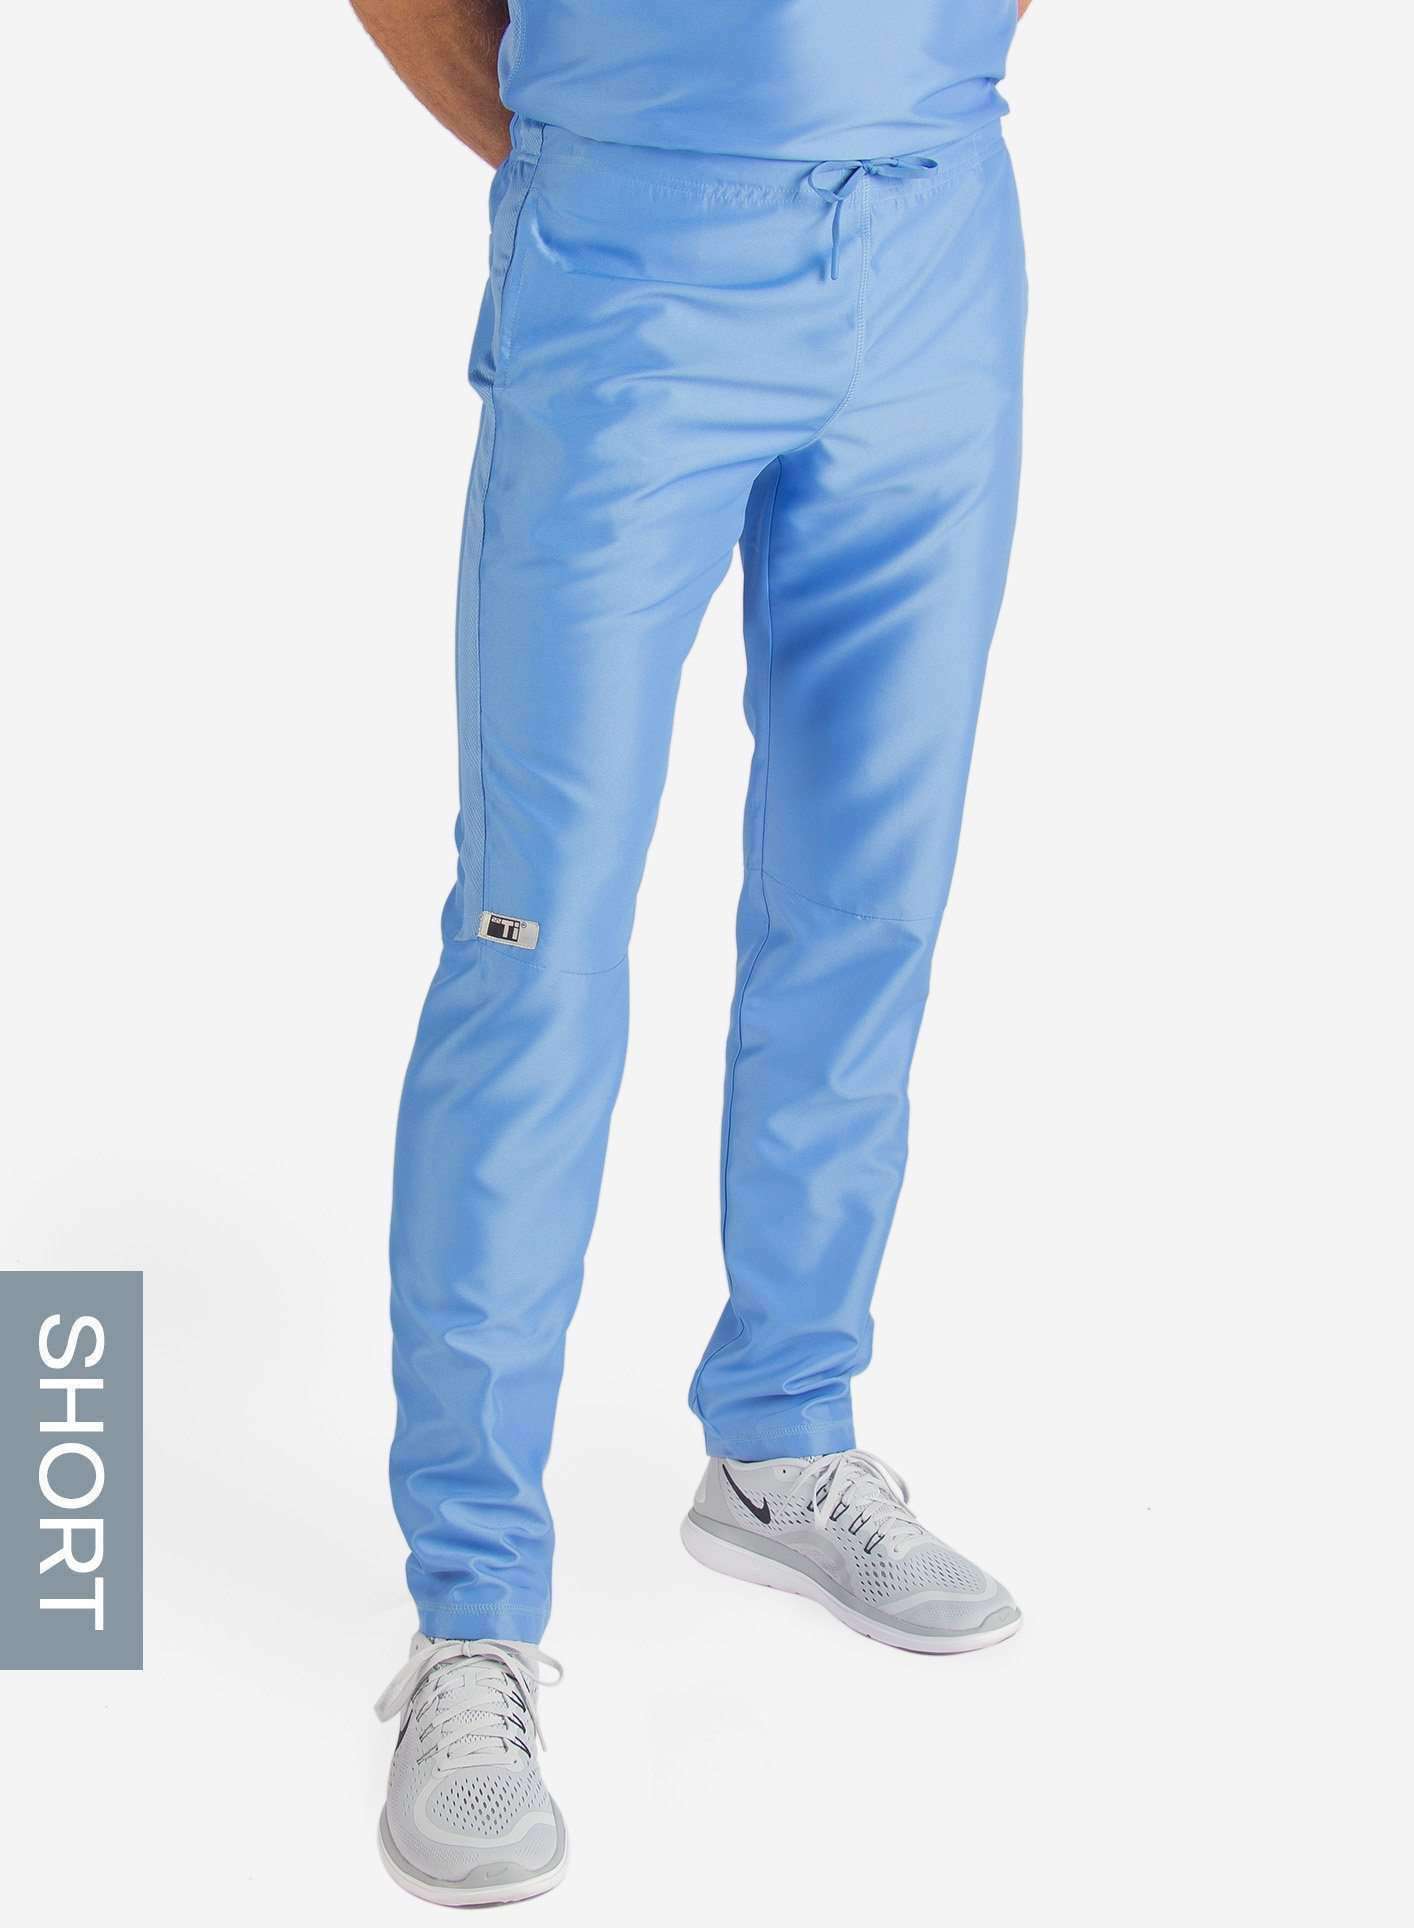 Men's Short Slim Fit Scrub Pants in ceil-blue